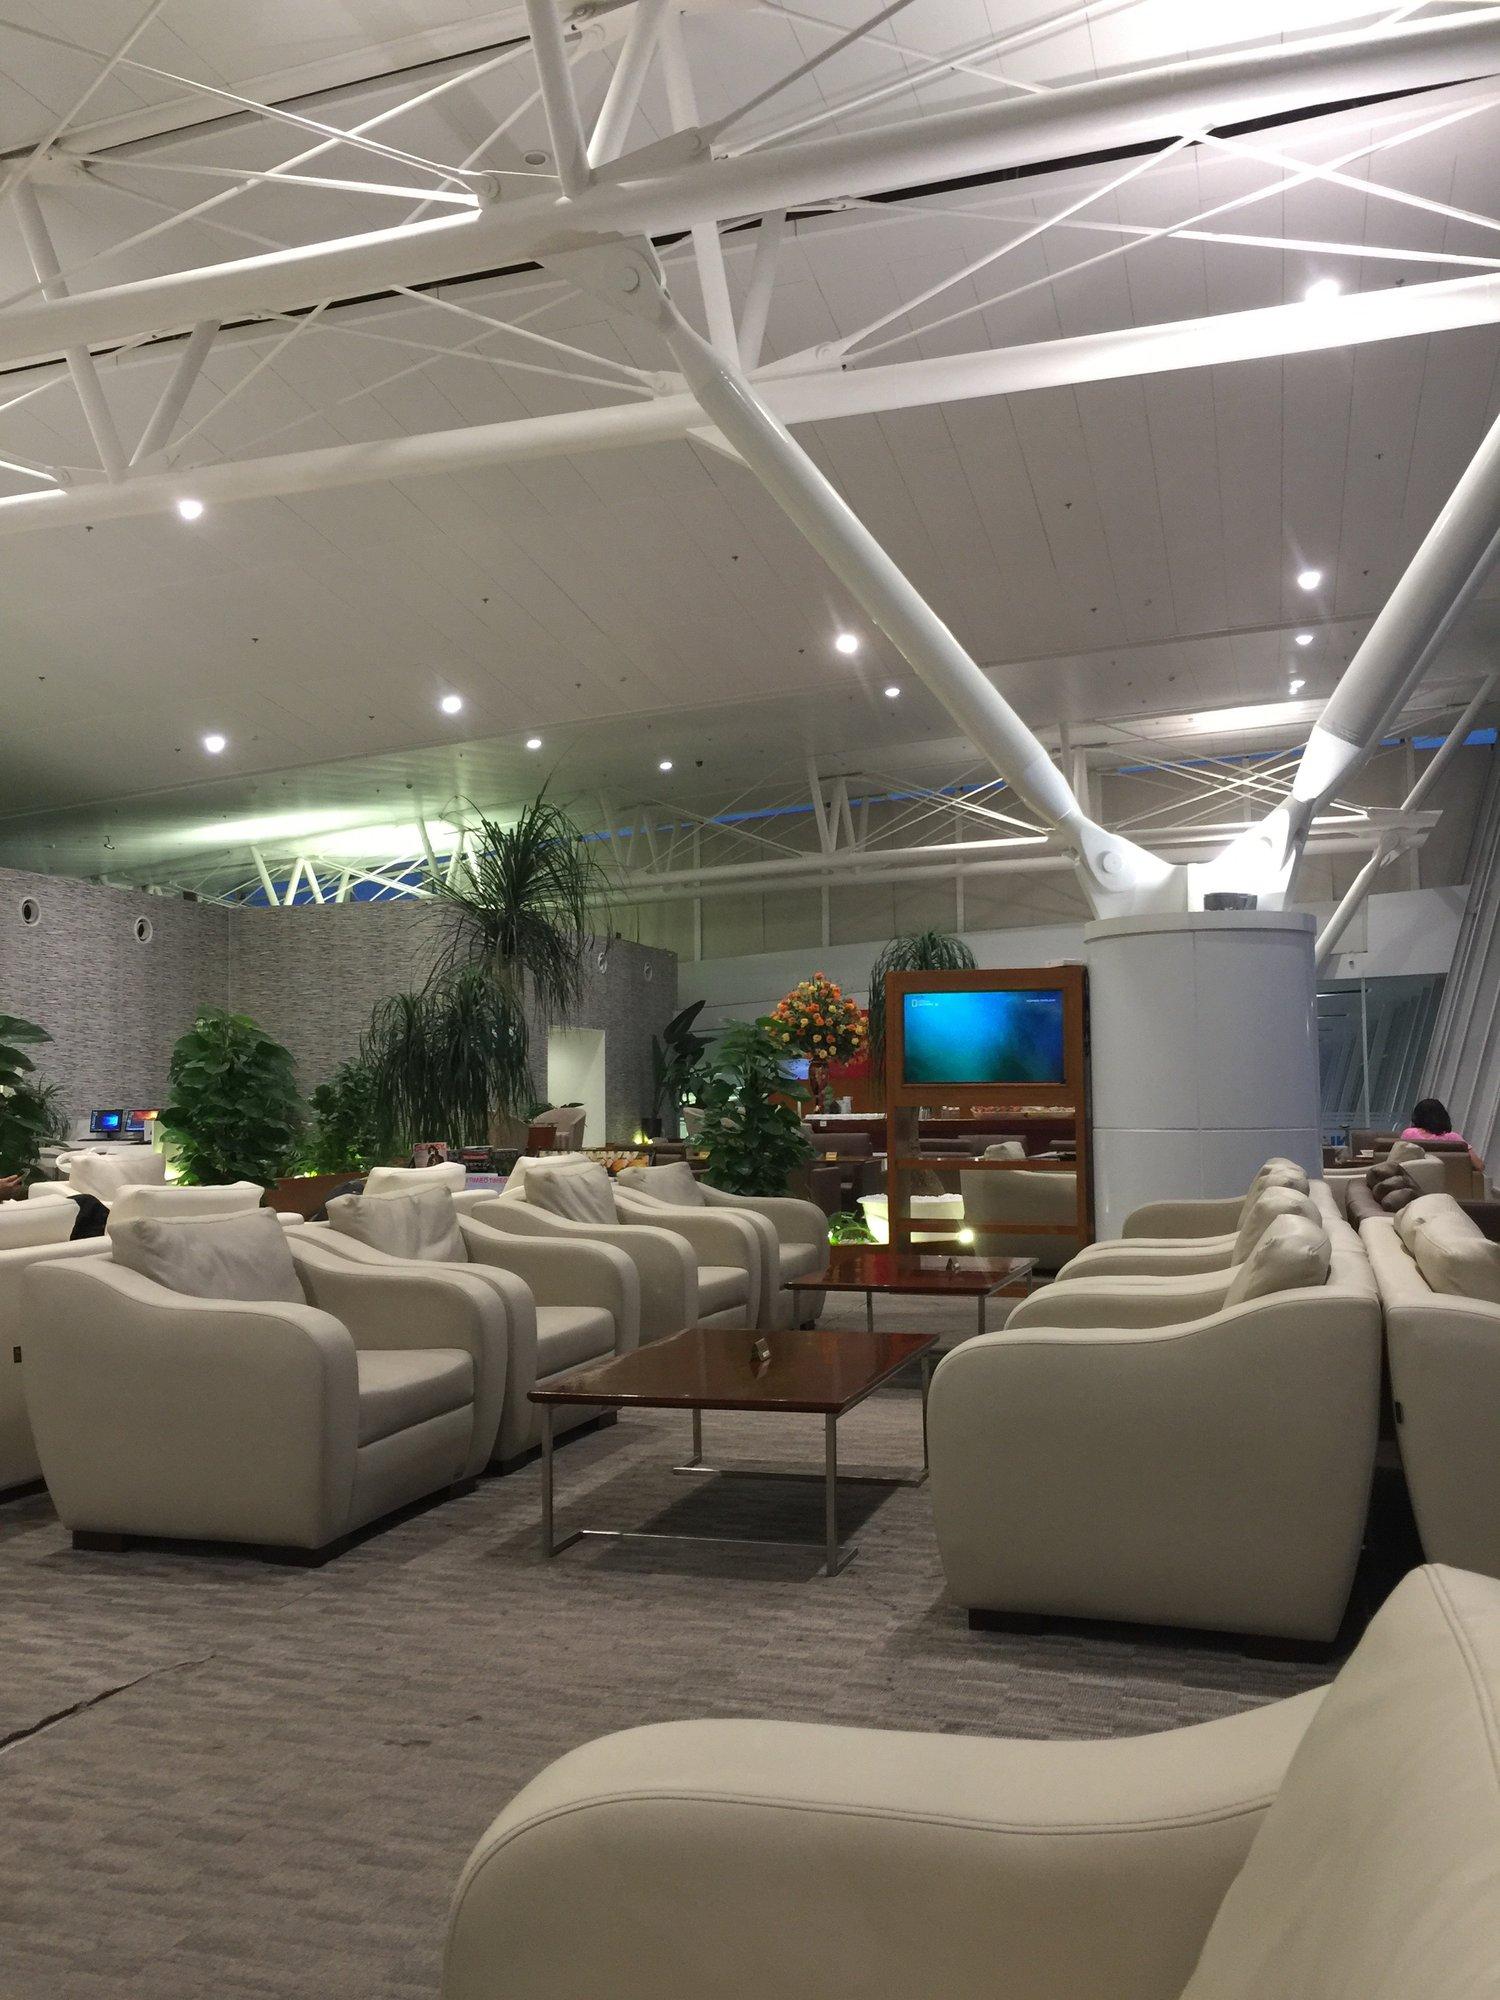 Noi Bai International Airport Business Lounge image 3 of 26